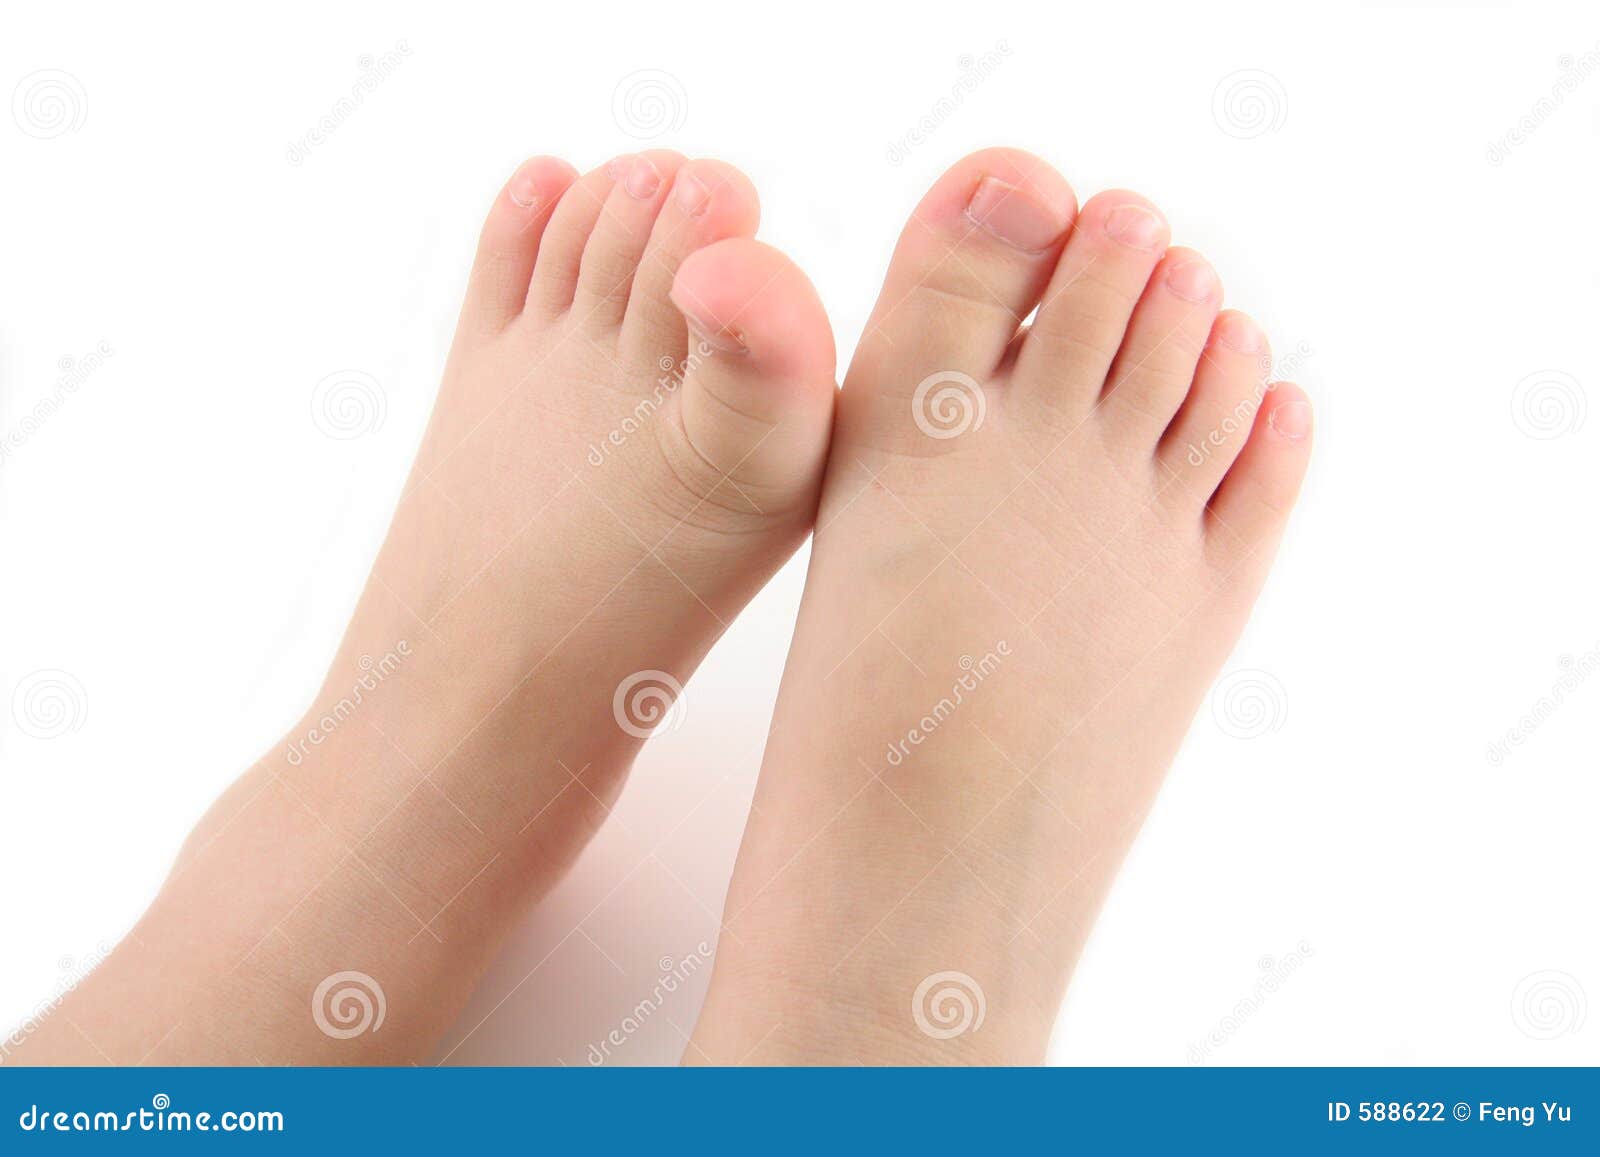 child foot